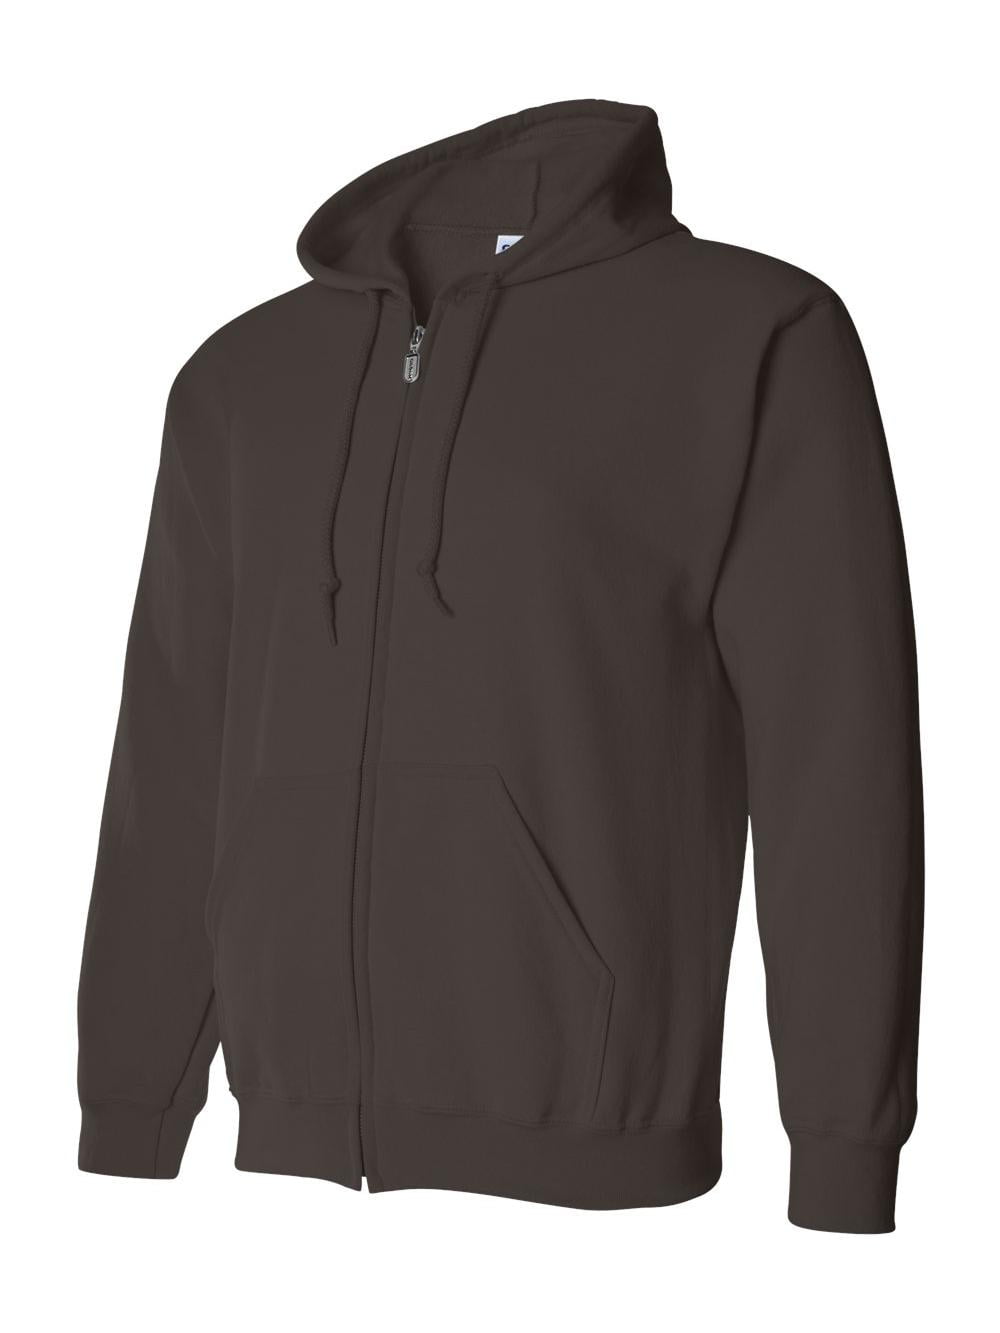 Gildan - Heavy Blend Full-Zip Hooded Sweatshirt - 18600 - Walmart